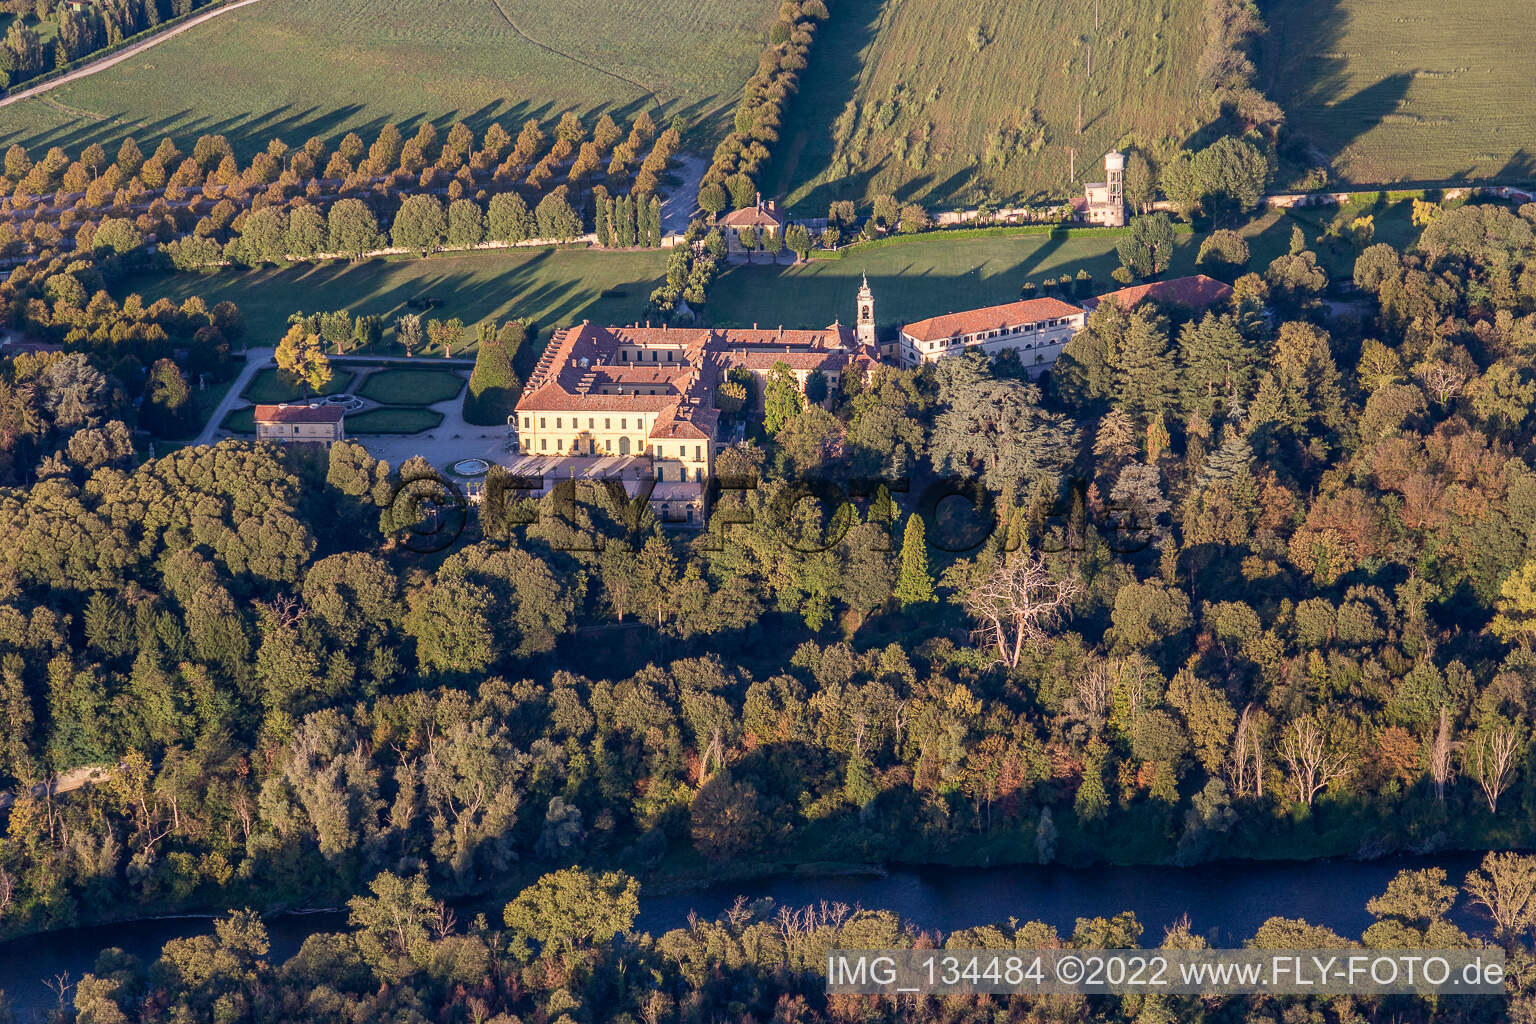 Villa Castelbarco in Vaprio d’Adda im Bundesland Lombardei, Italien